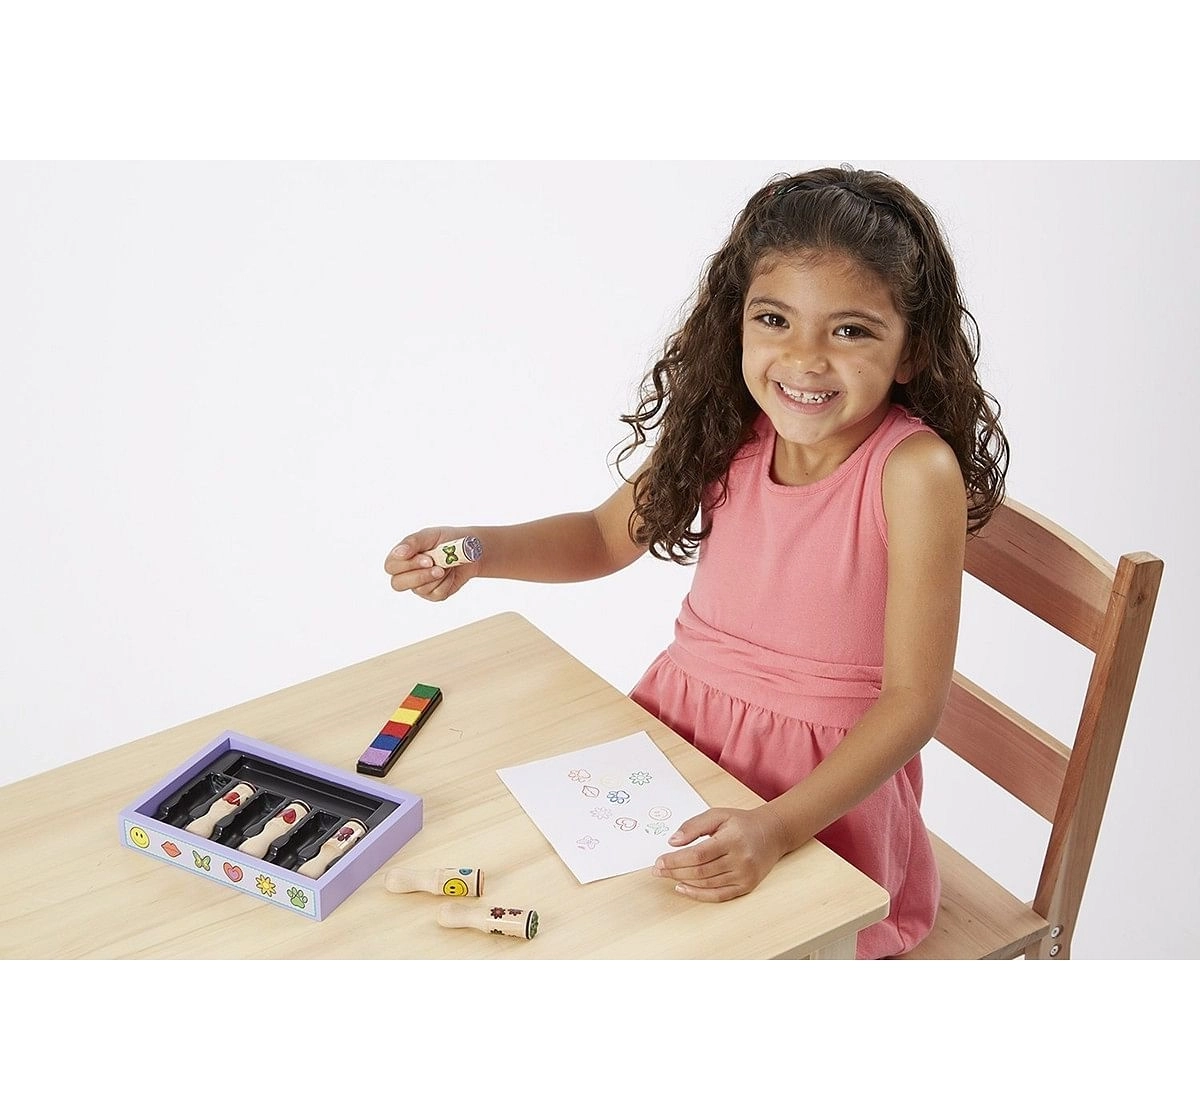 Melissa & Doug 2407 Happy Handle Stamp Set,Multi Color DIY Art & Craft Kits for Kids age 4Y+ 